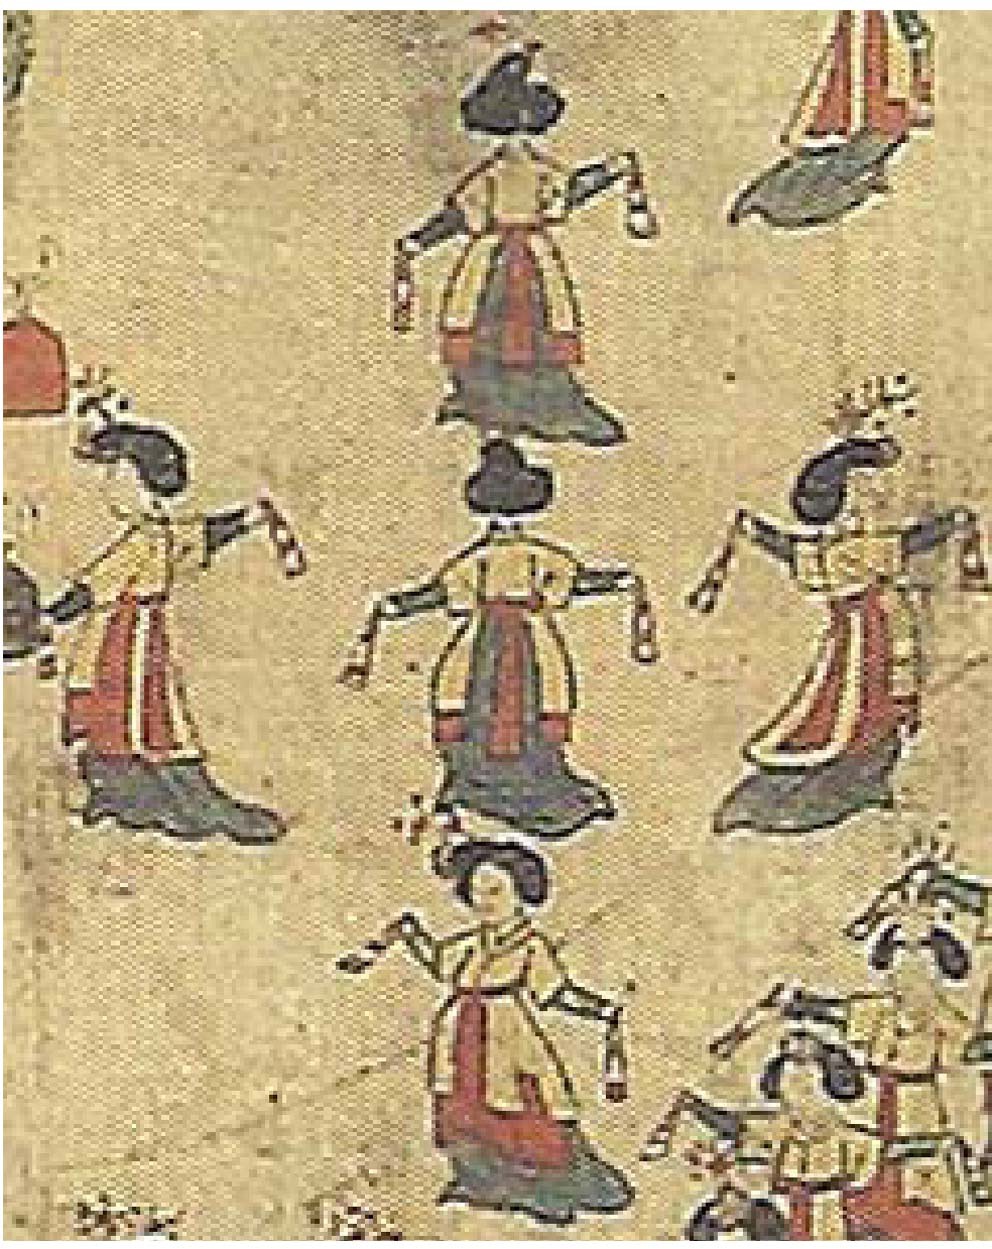 Jangsaengboyeonjimu, Royal banquet in the
year of Gichuk, 1829, National Museum of Korea
(2010), p. 53.